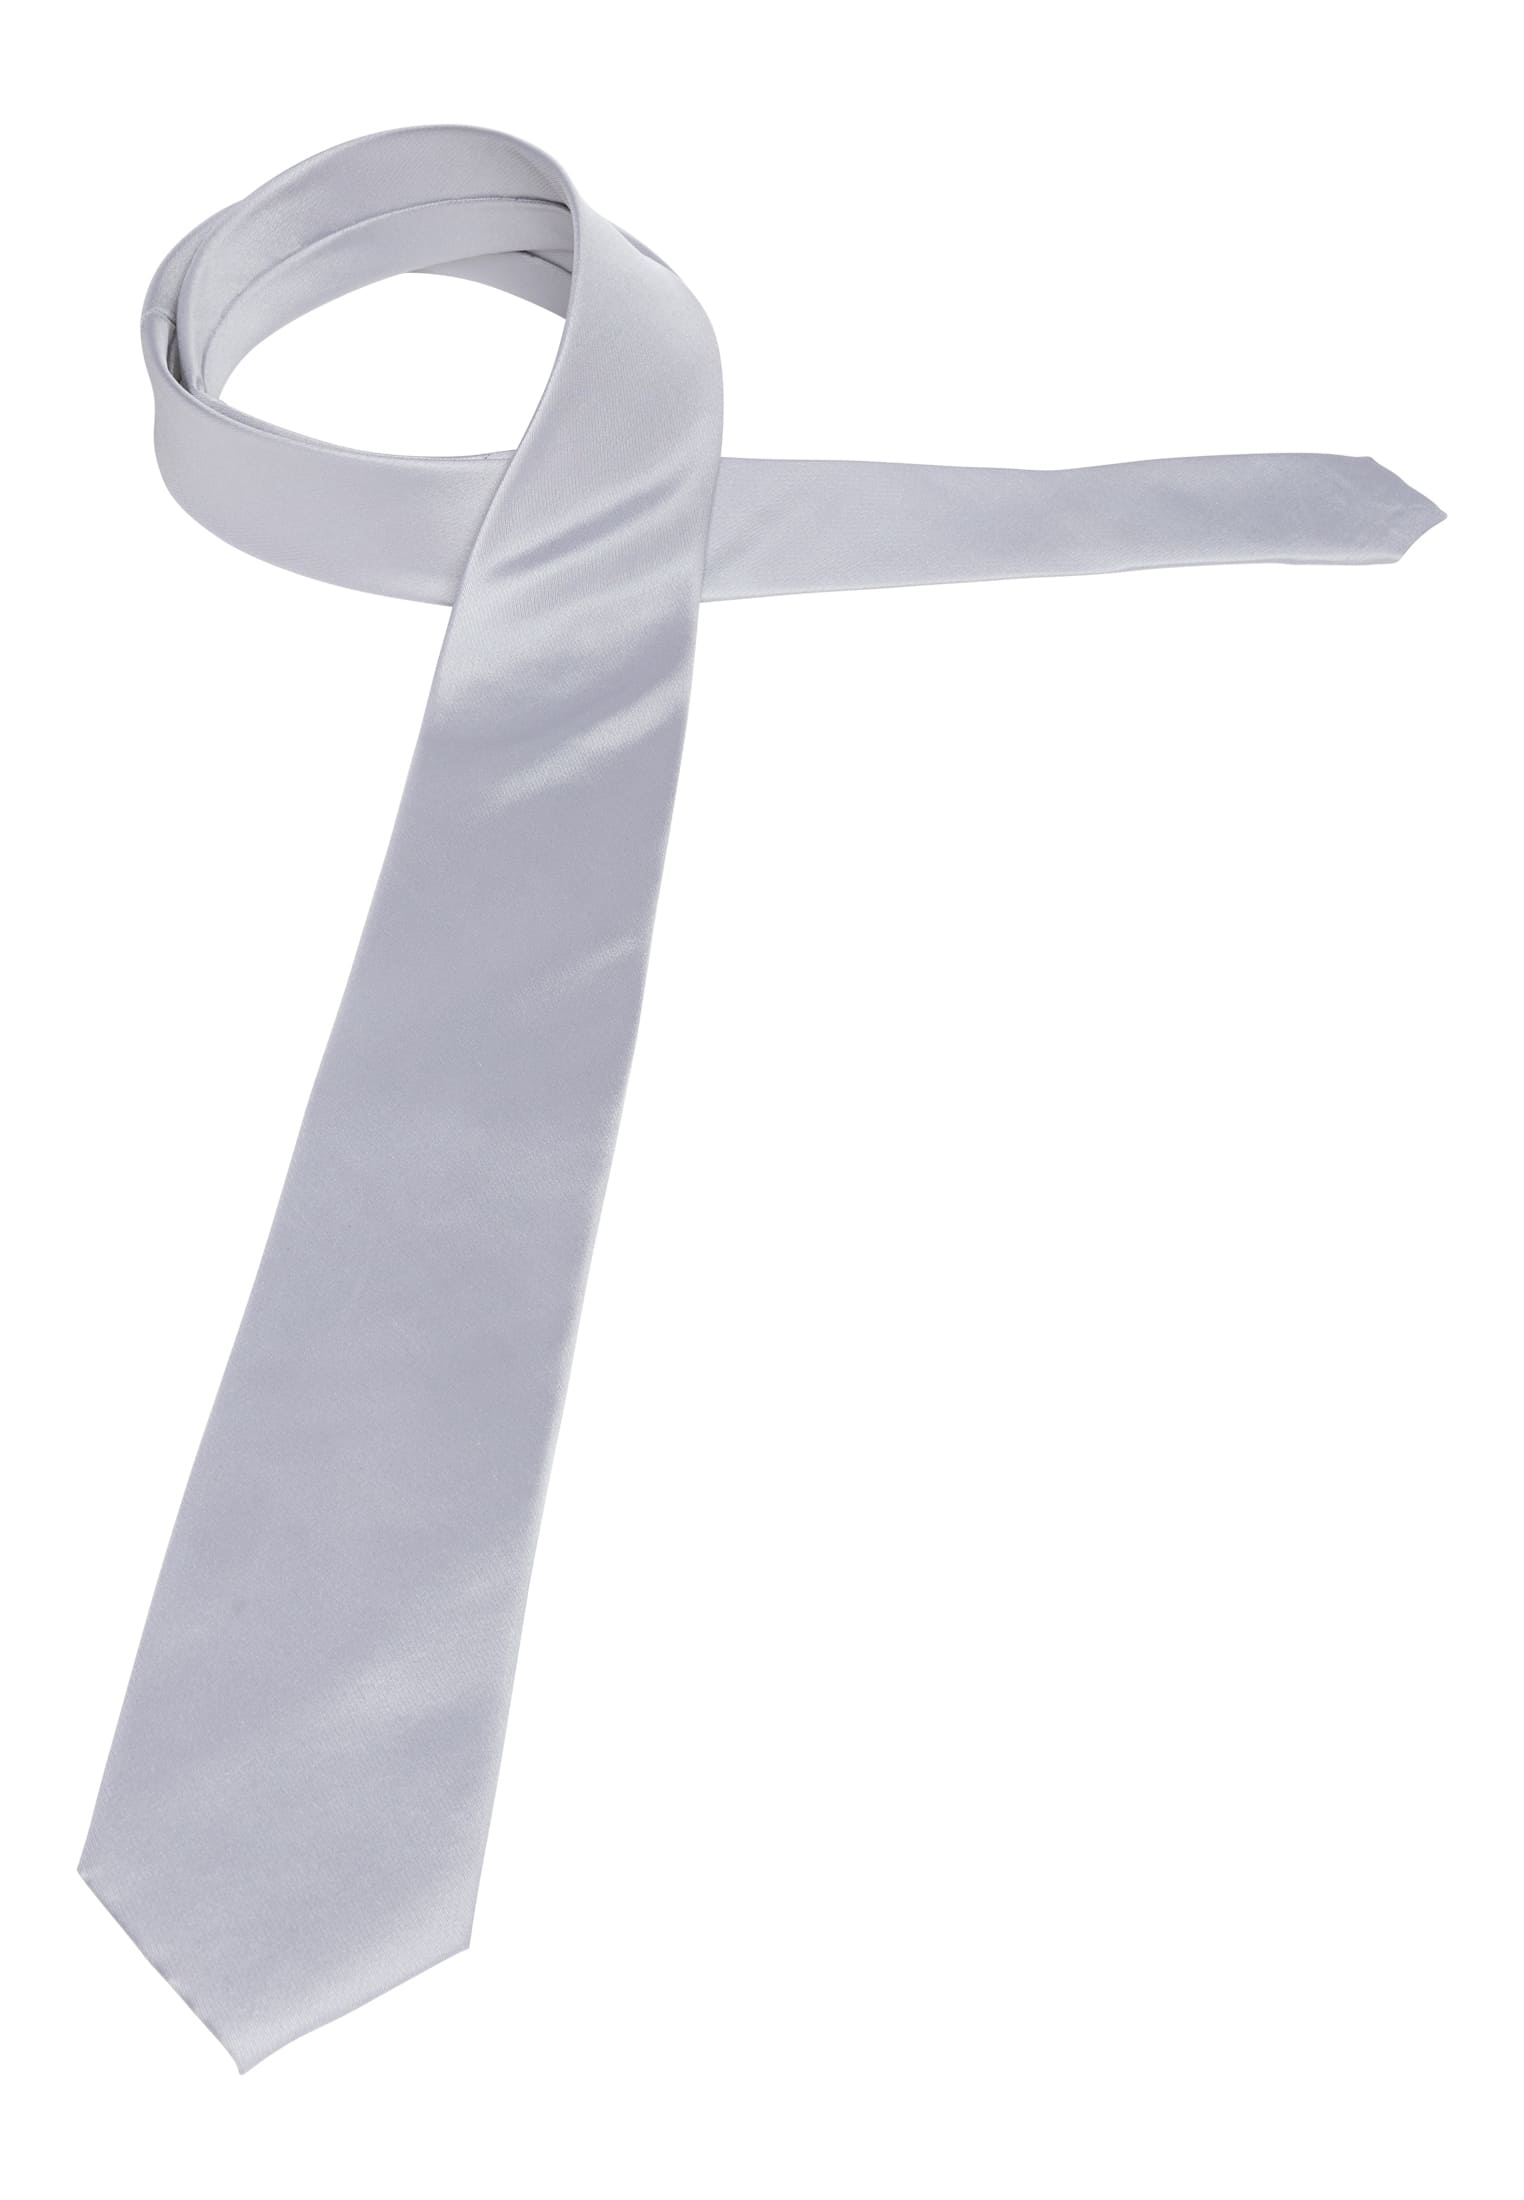 Krawatte in silber unifarben | | | 1AC02086-03-11-142 silber 142